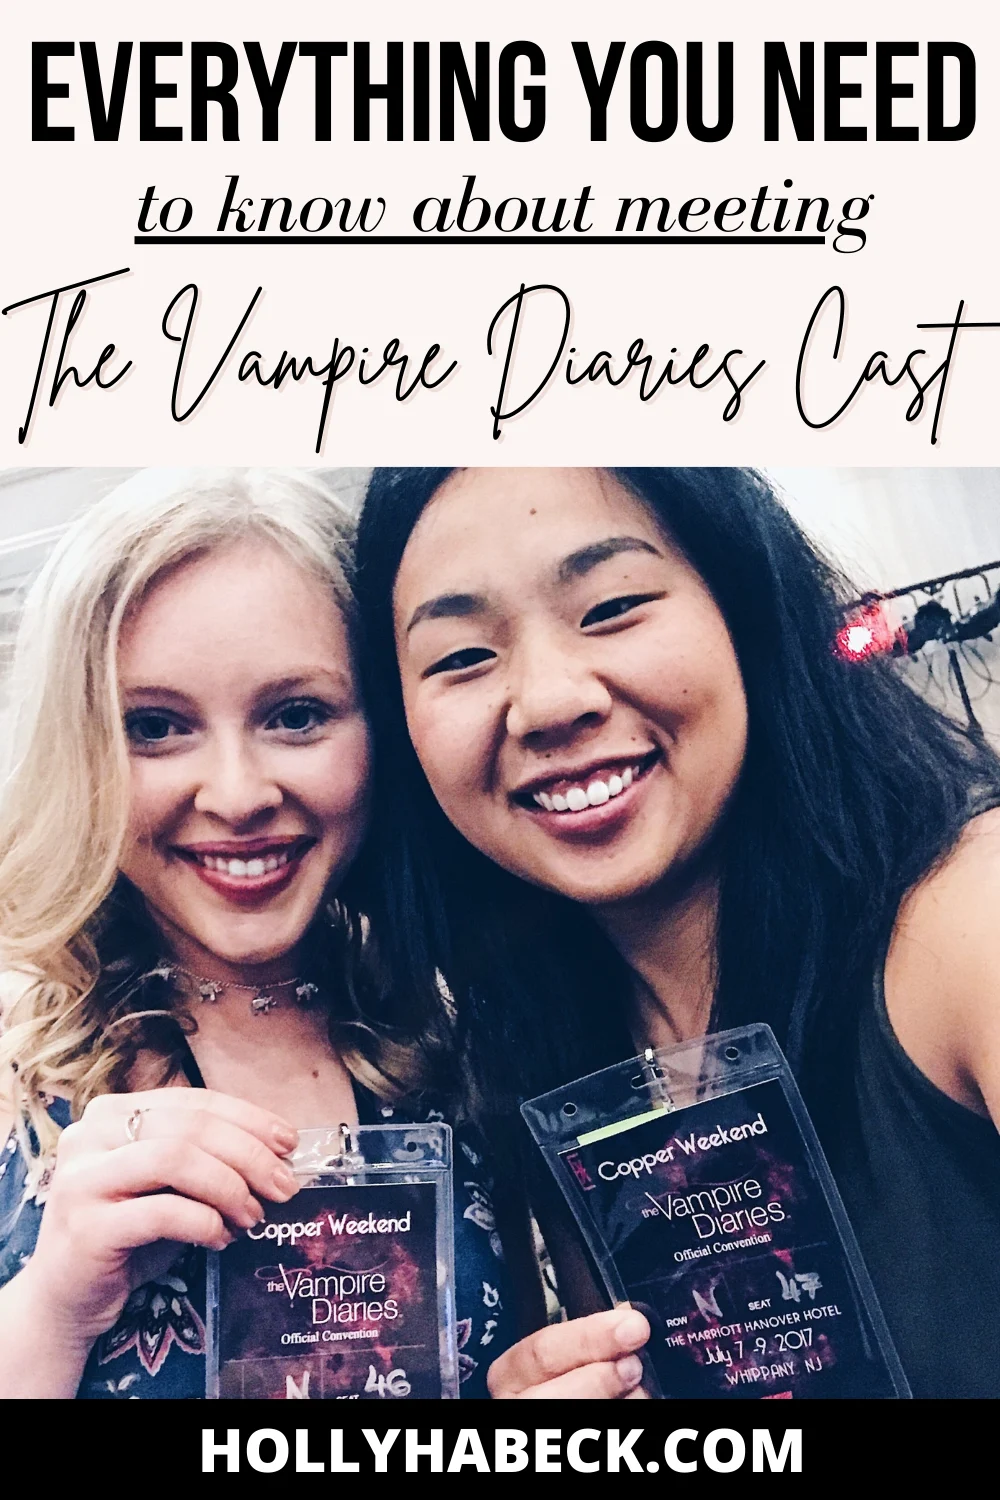 Vampire Diaries Convention